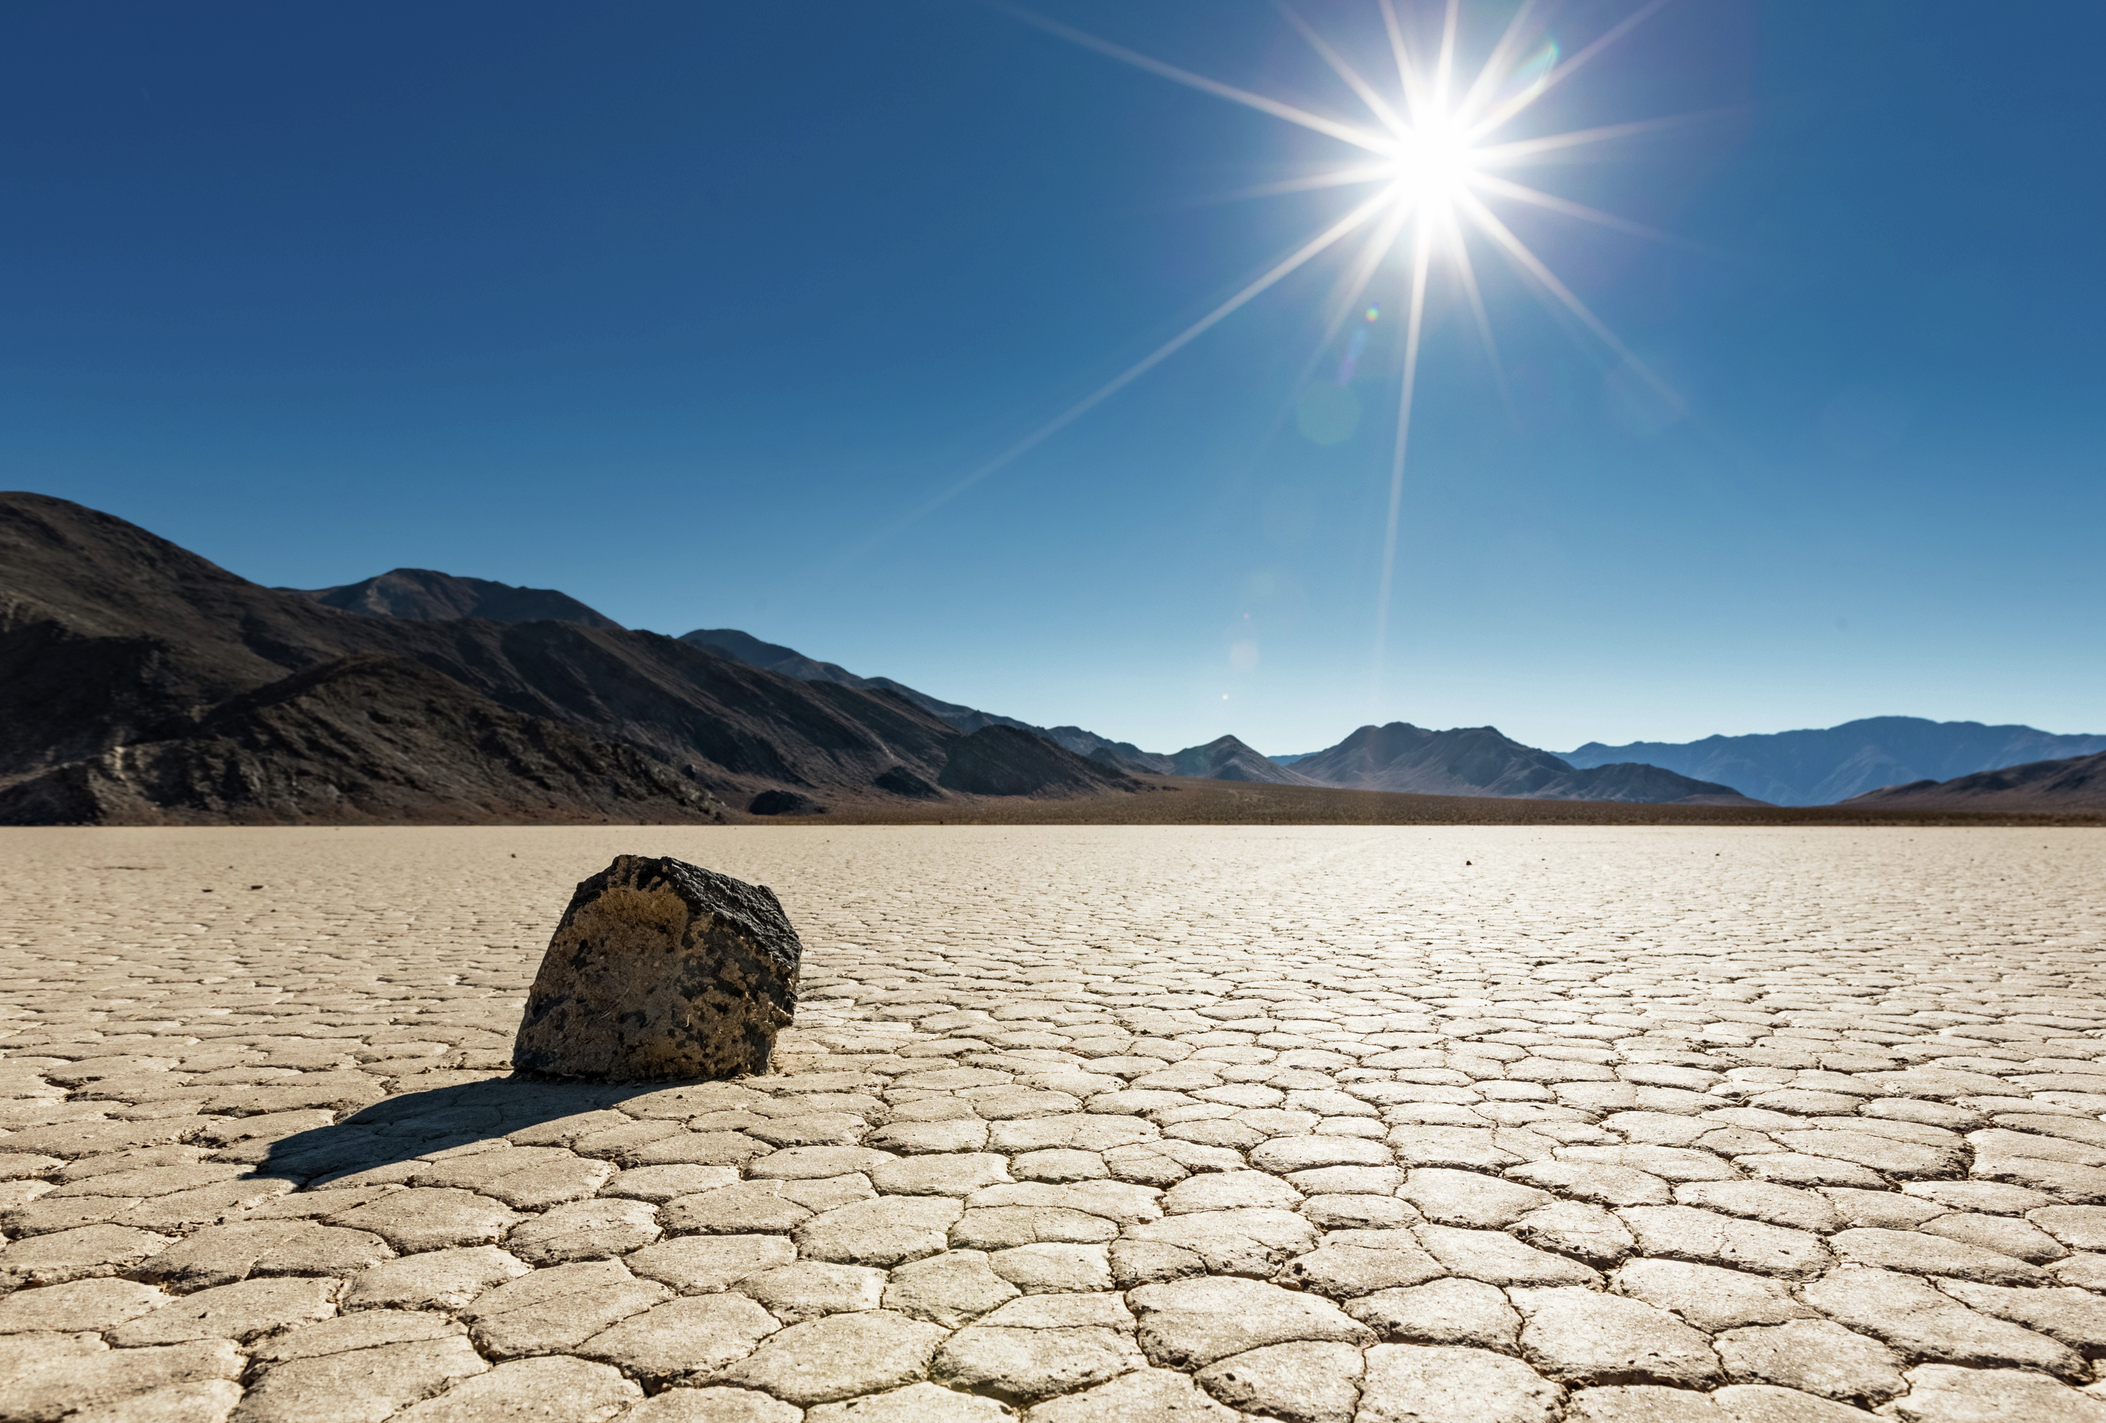 Will Death Valley reach record temperatures?